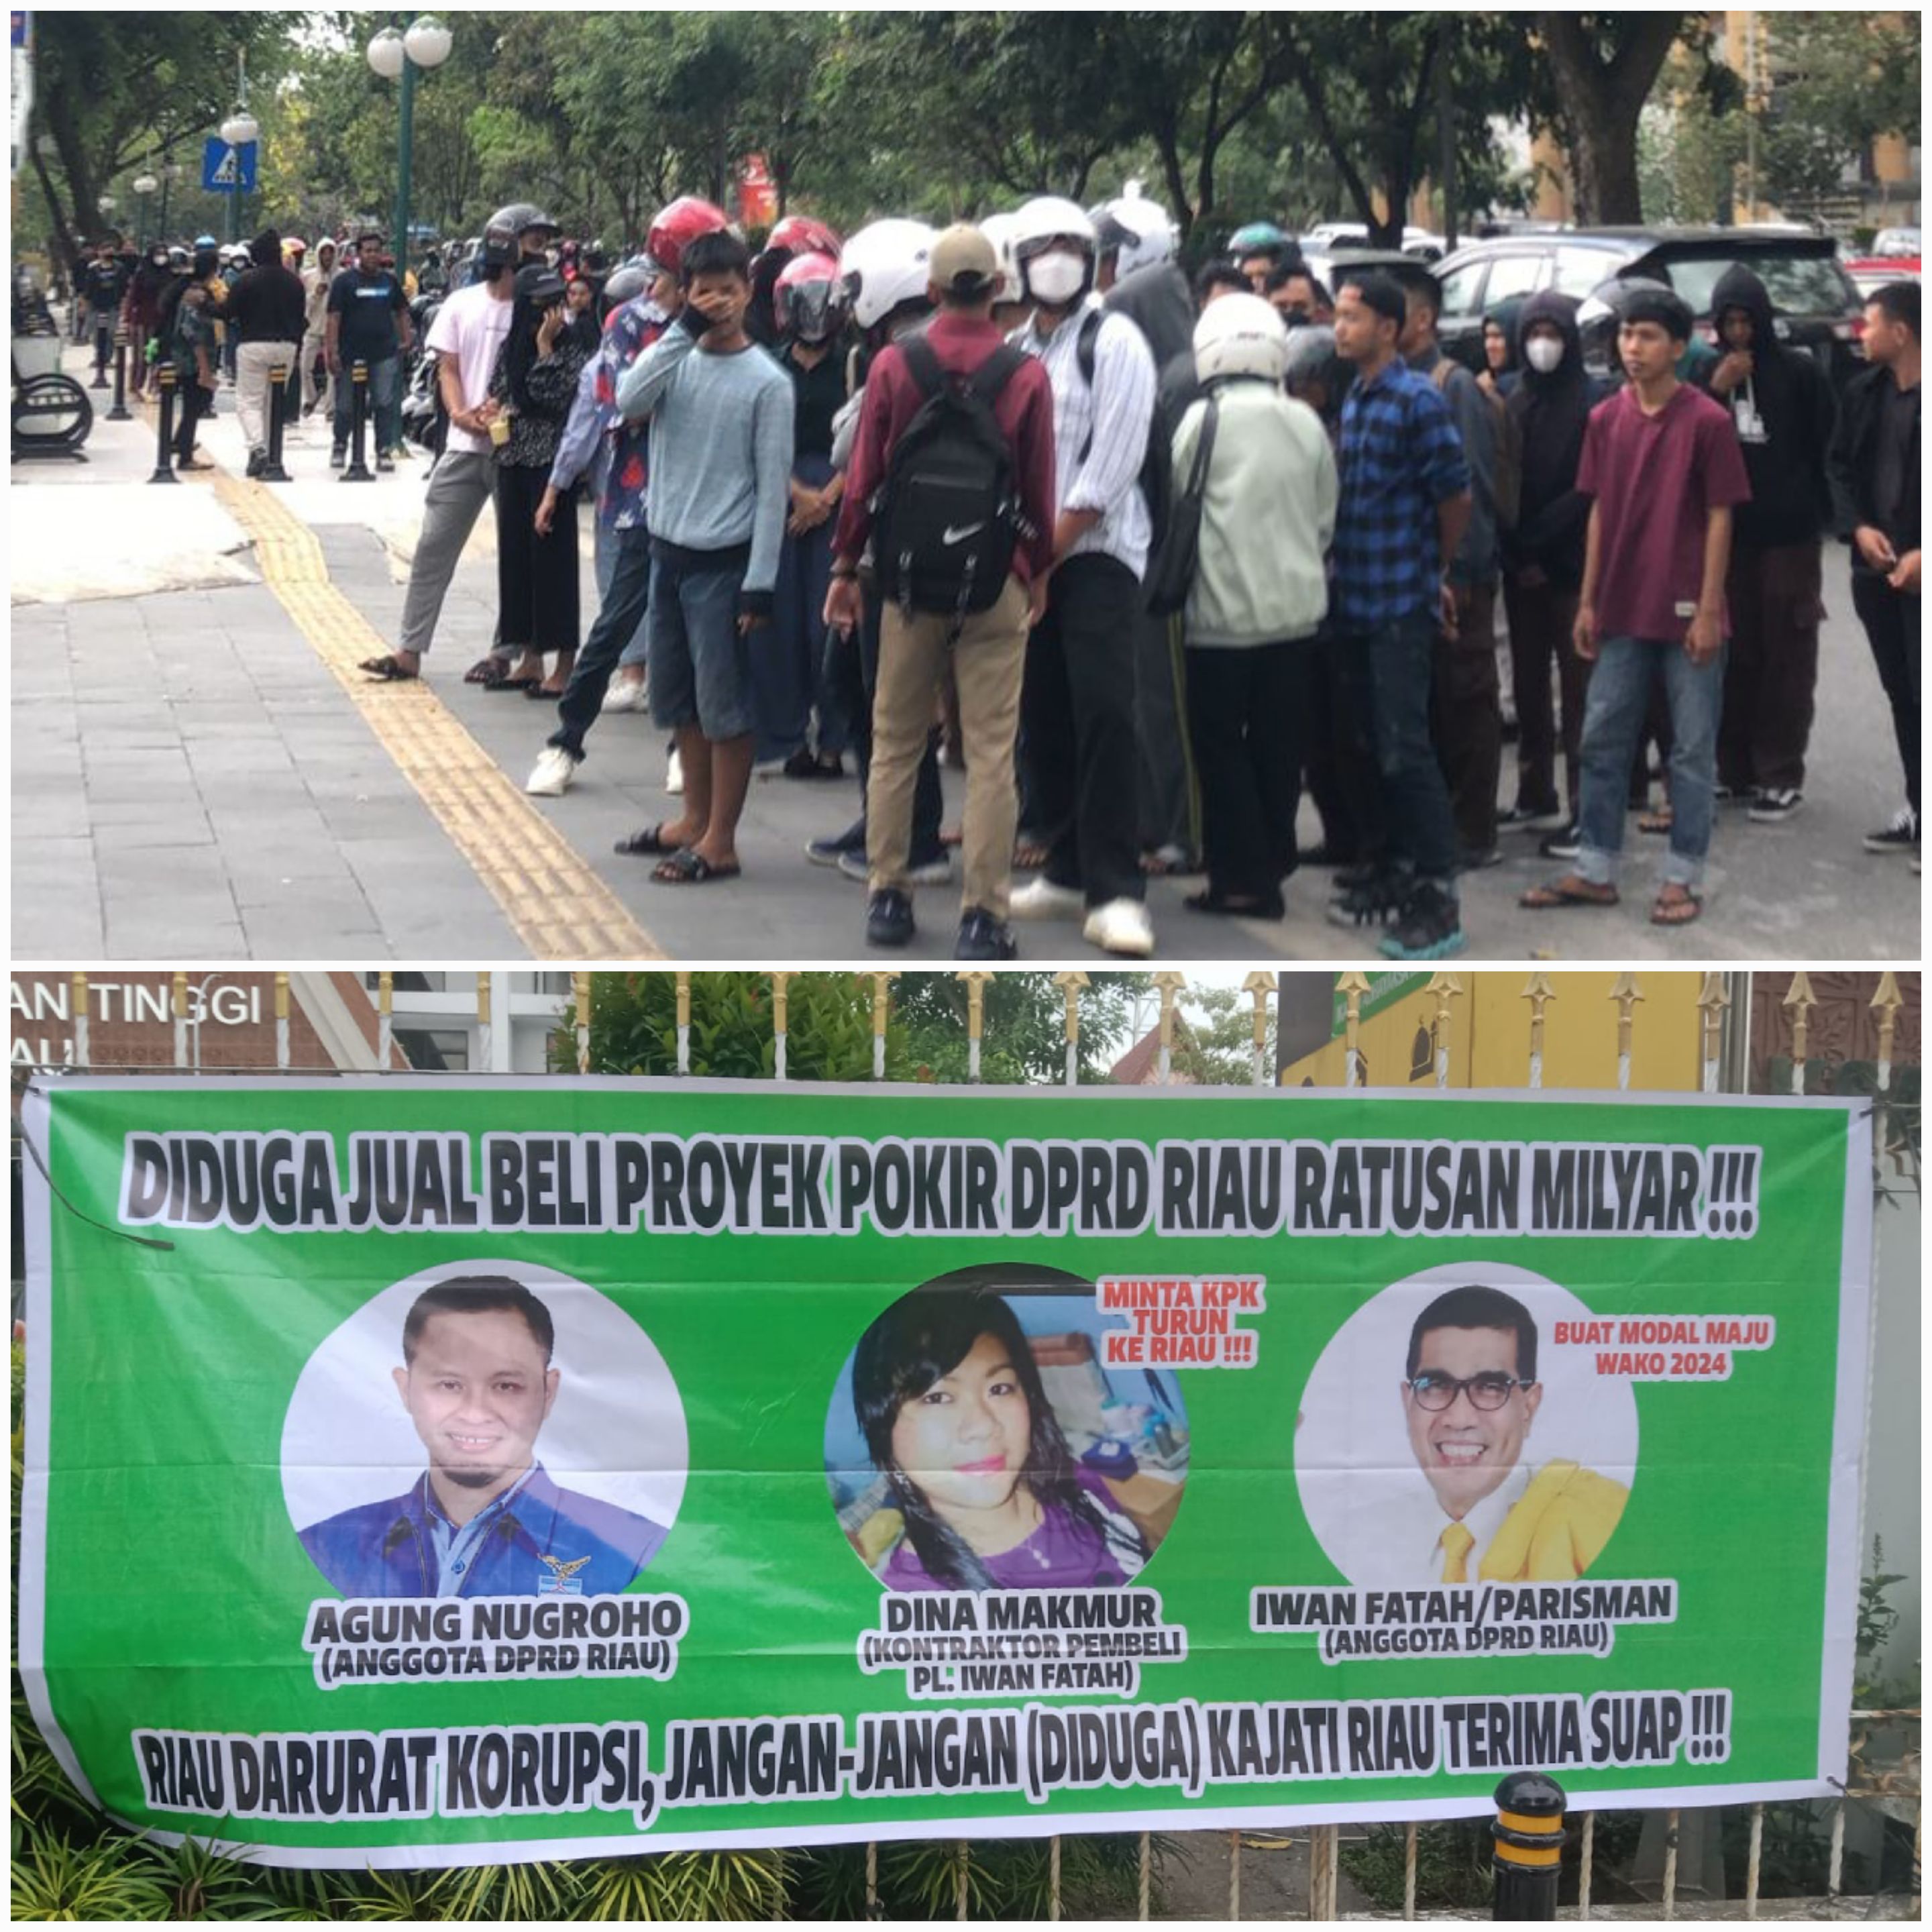 GMGK Geruduk Kejati Riau Terkait Dugaan Korupsi Pokir DPRD Riau, Kajati : Pidsus Harus Usut Tuntas